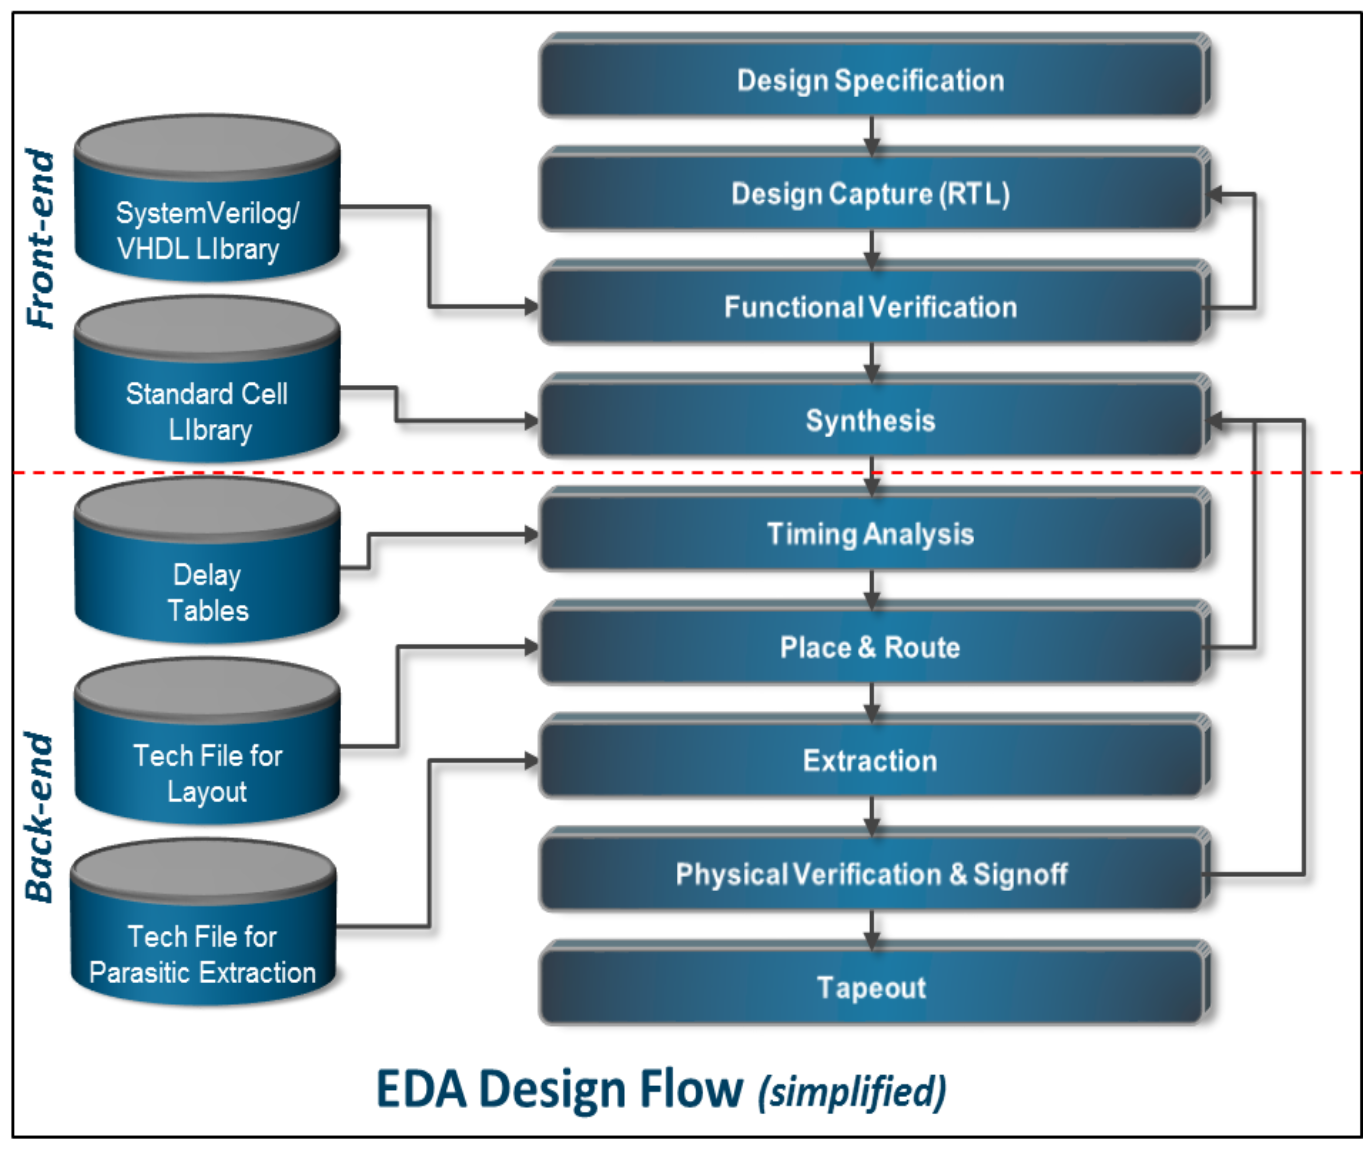 Describe high level EDA design flow as flow chart.